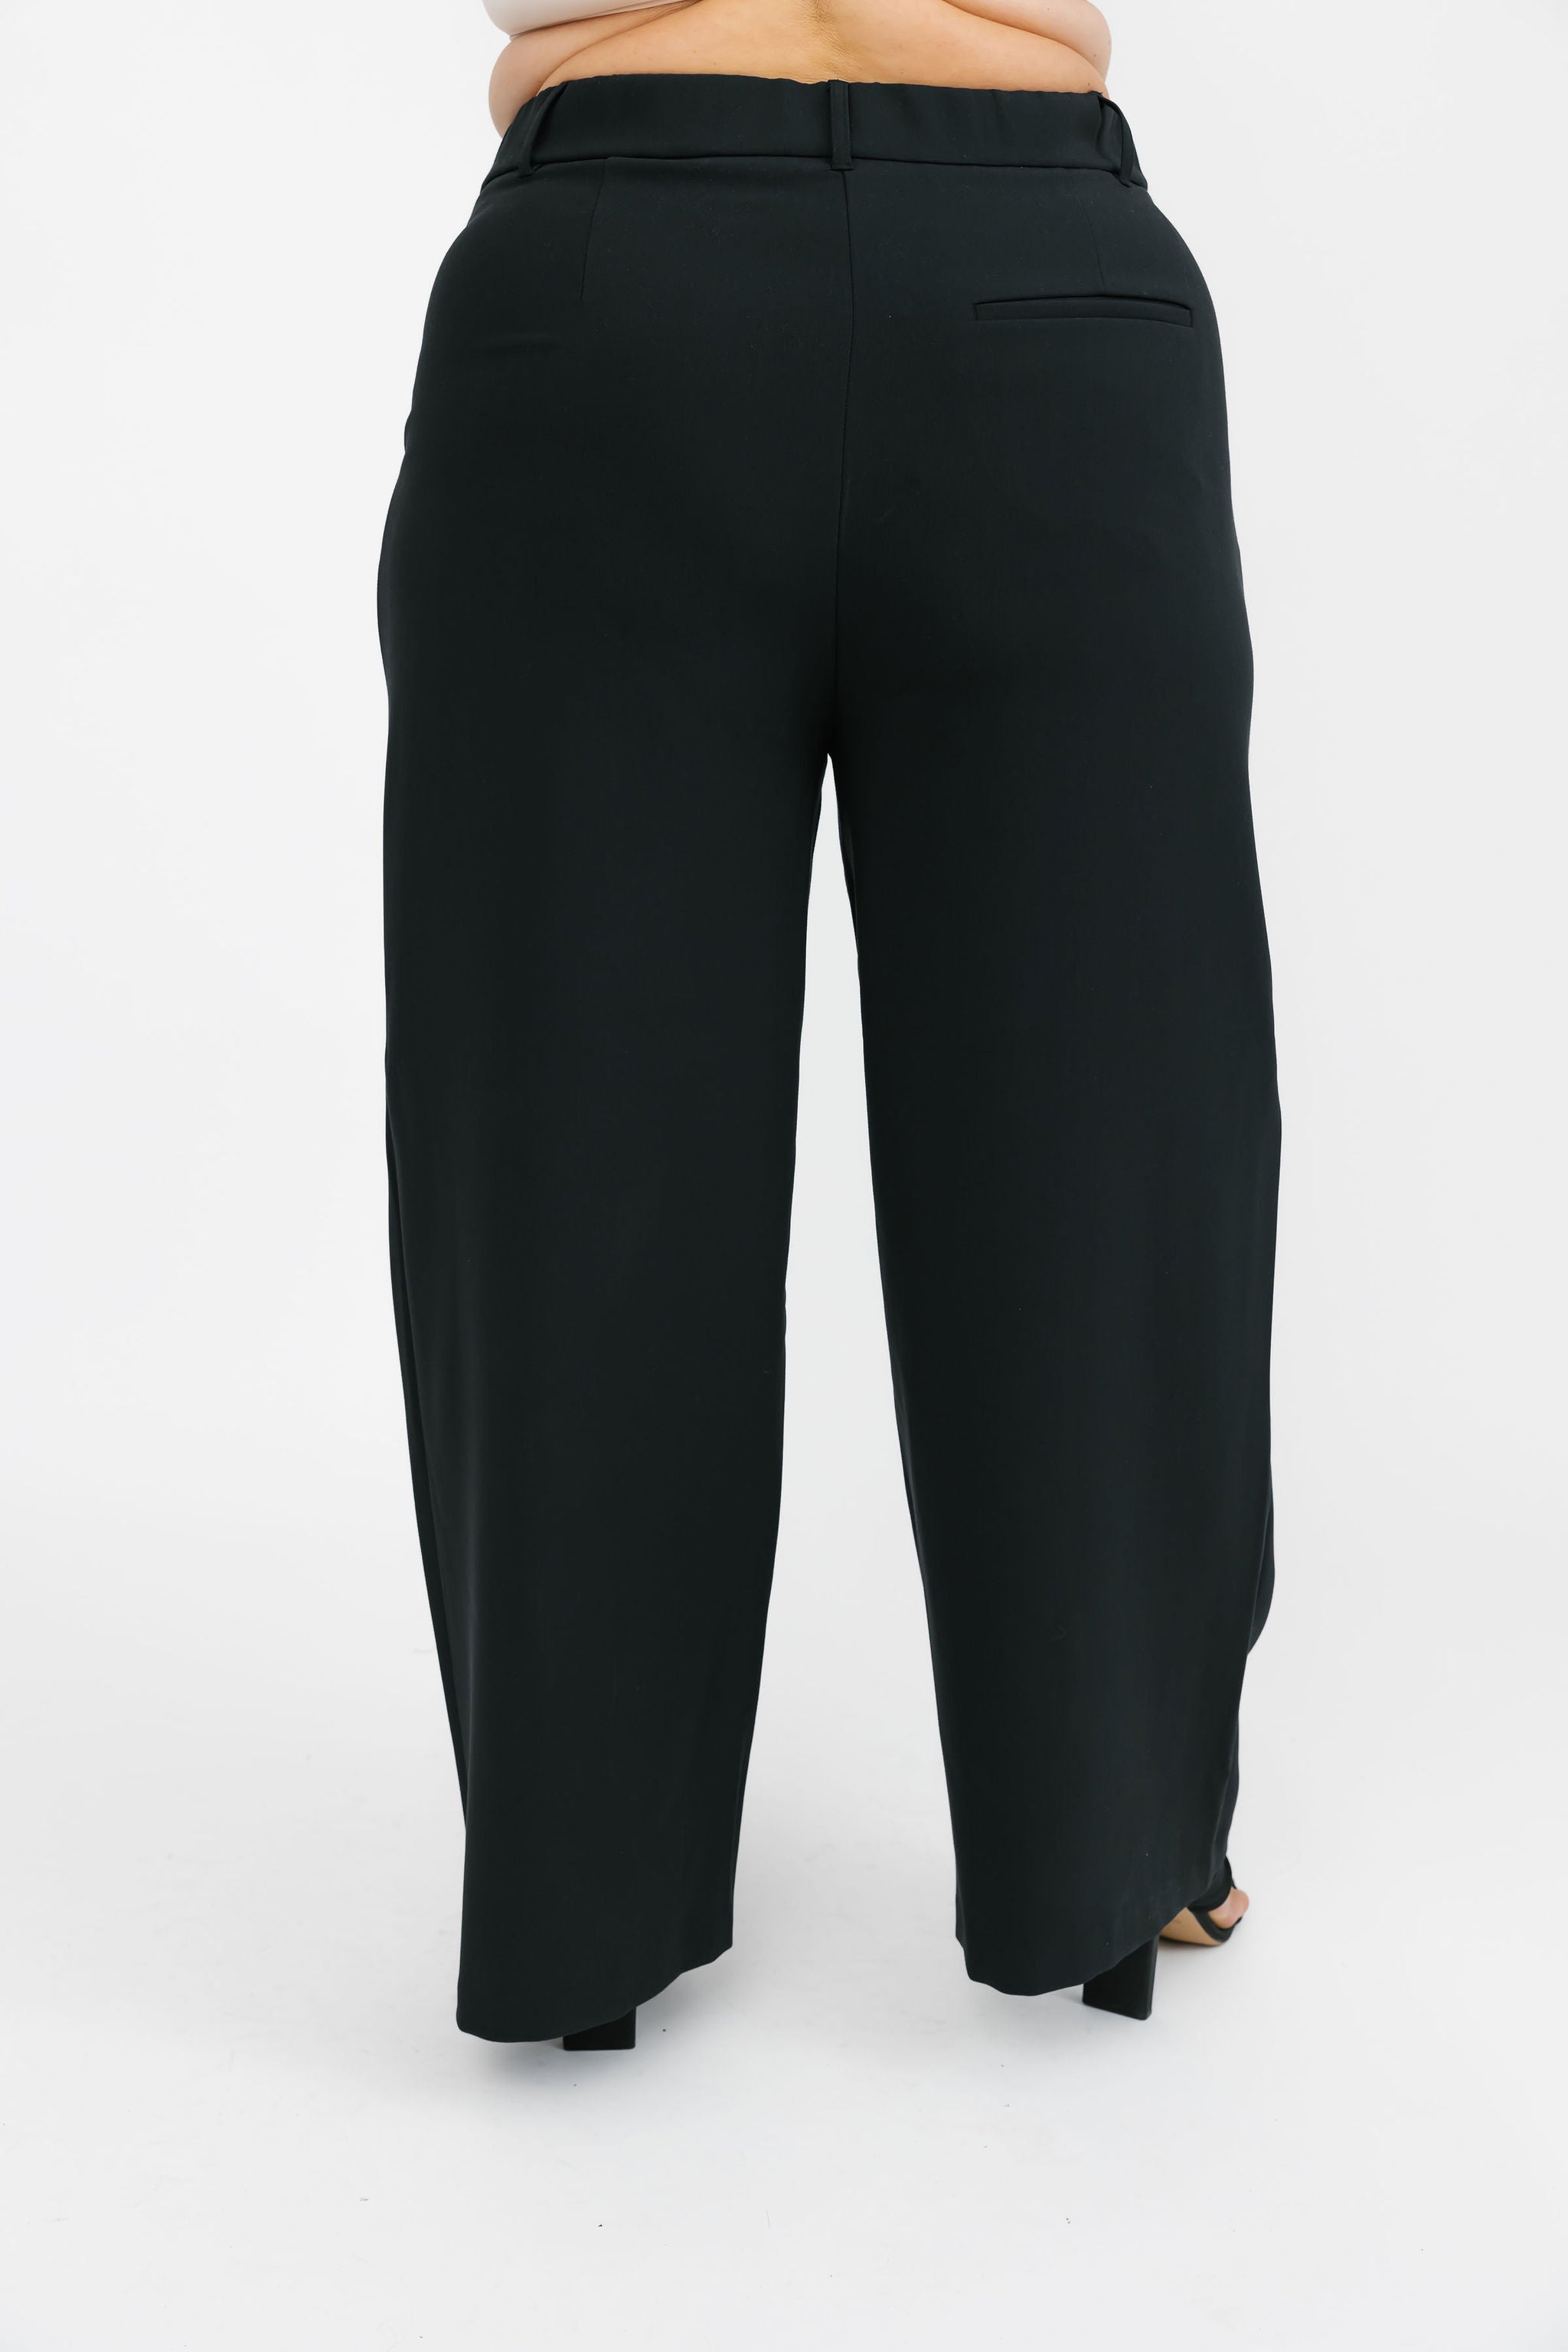 Buy Black Cord Wide Leg Trousers 16 | Trousers | Tu